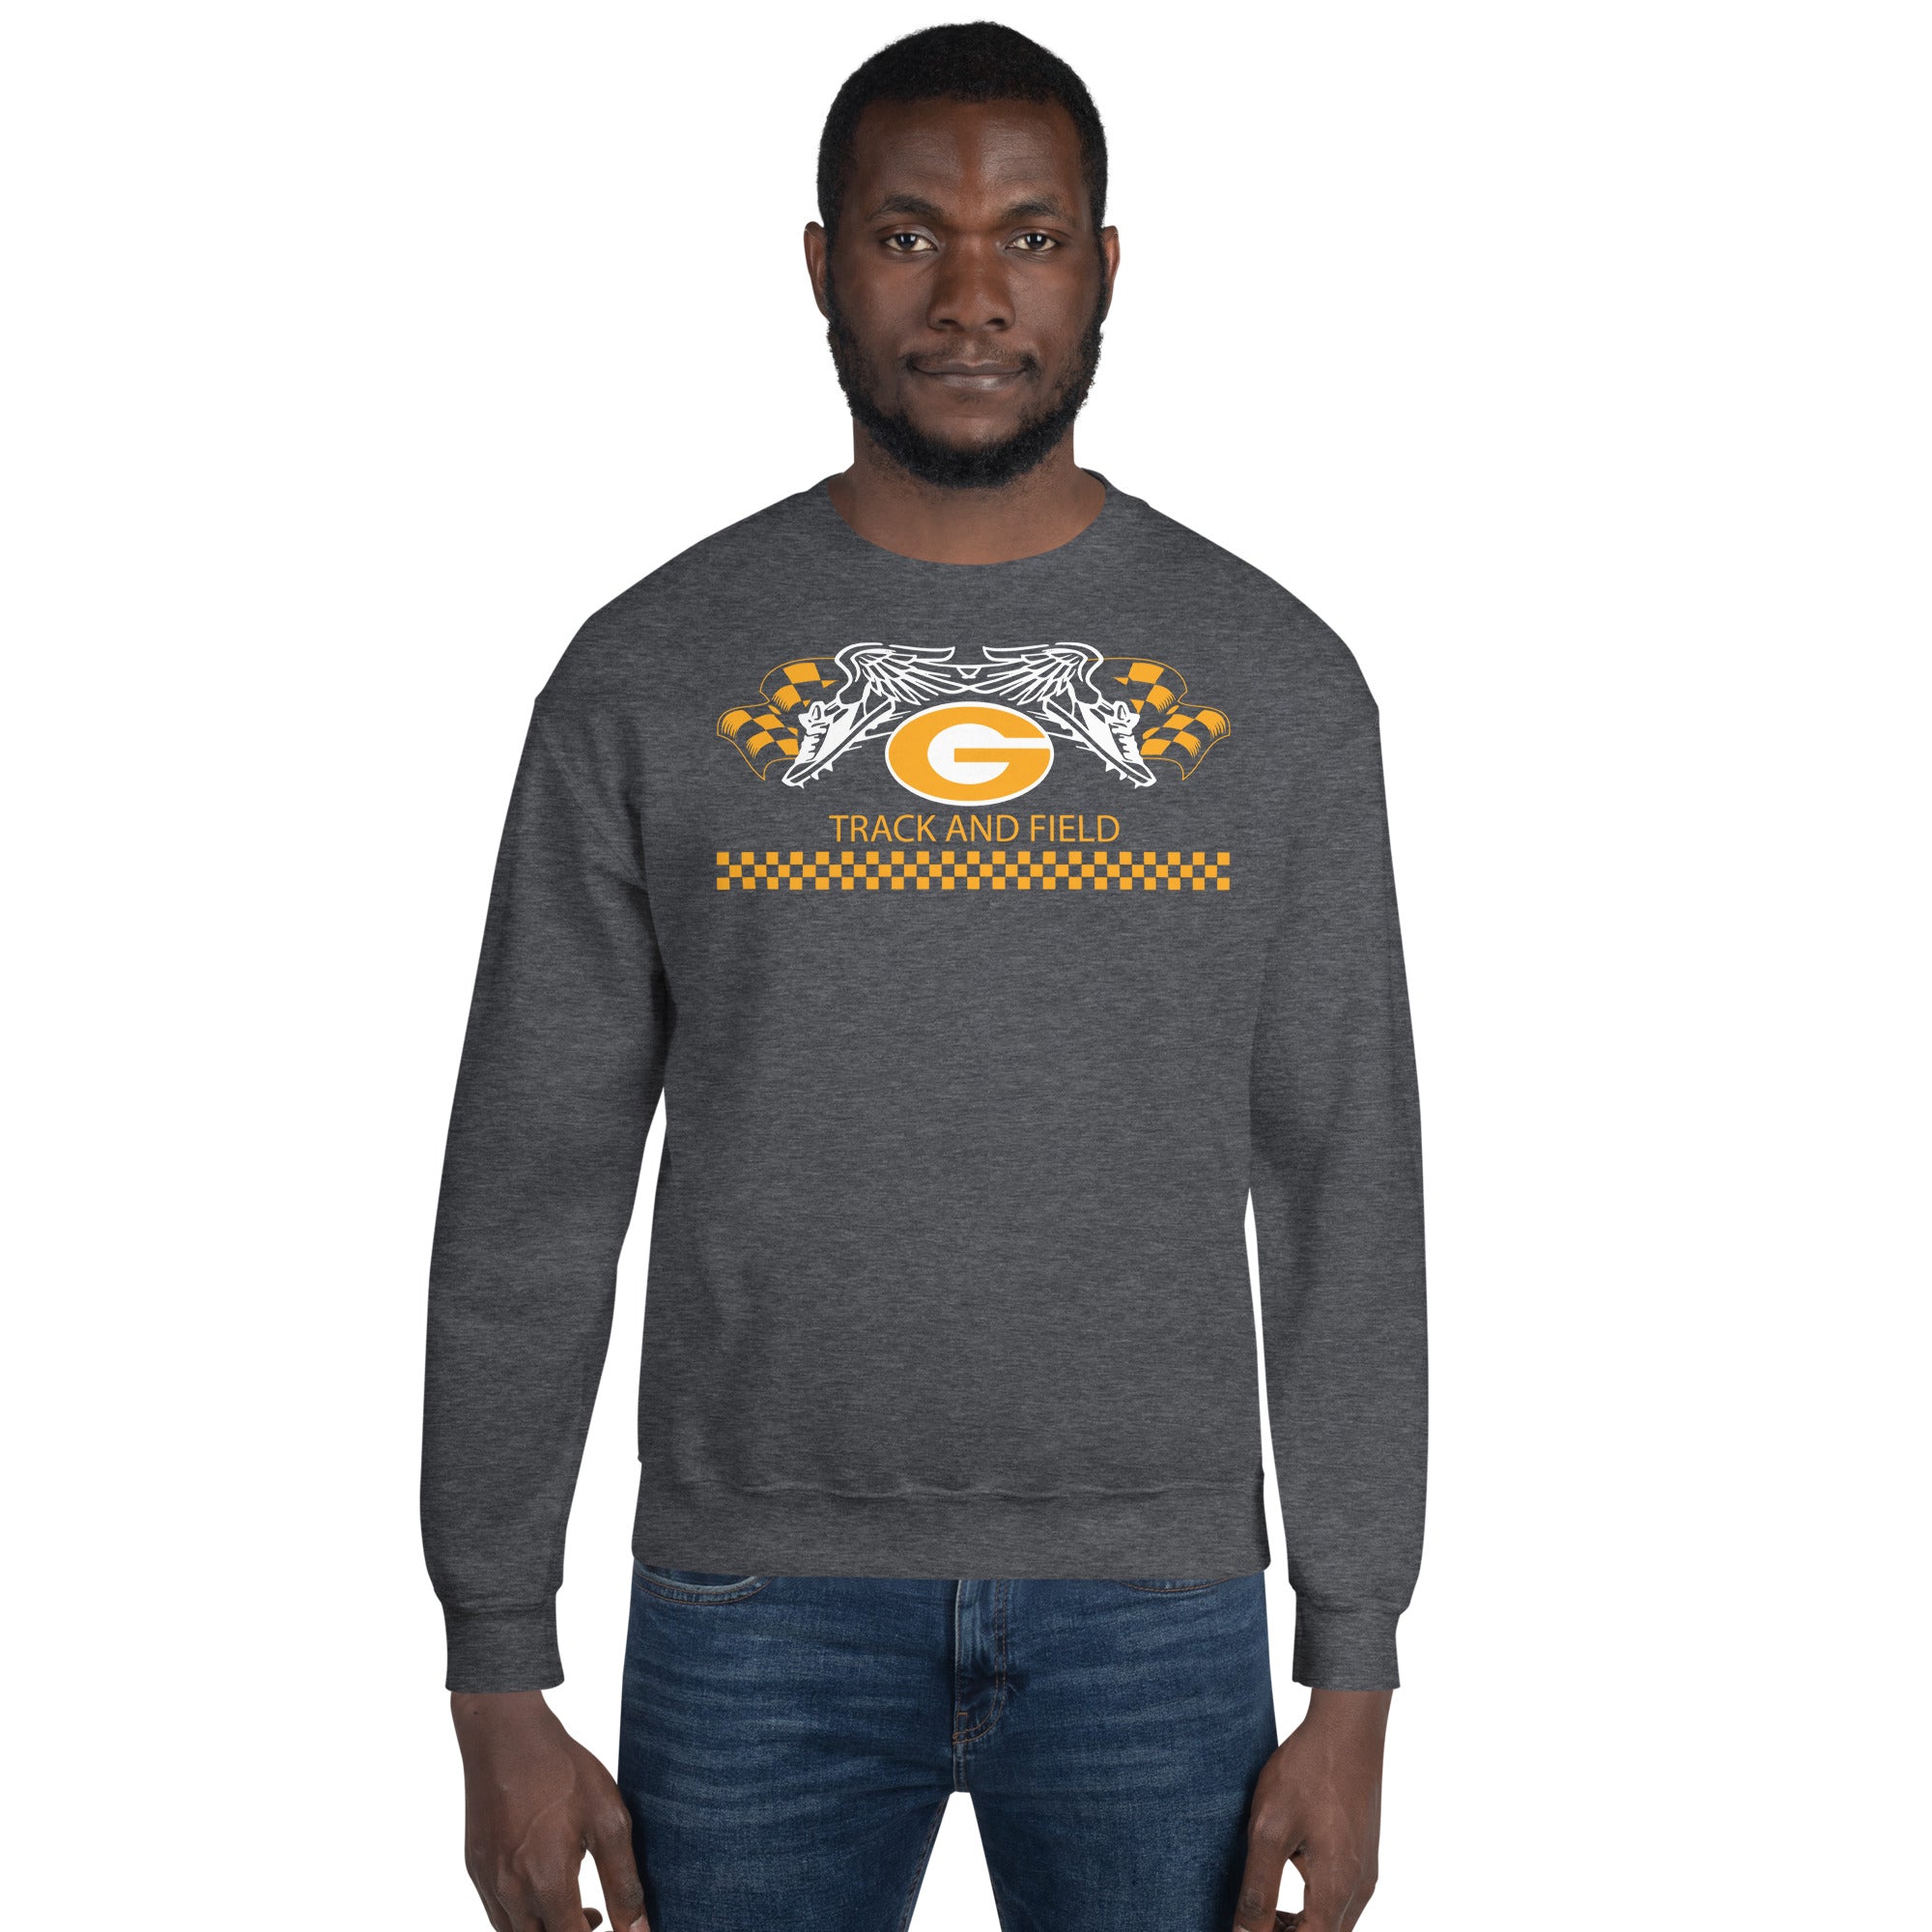 Track & Field Unisex Sweatshirt